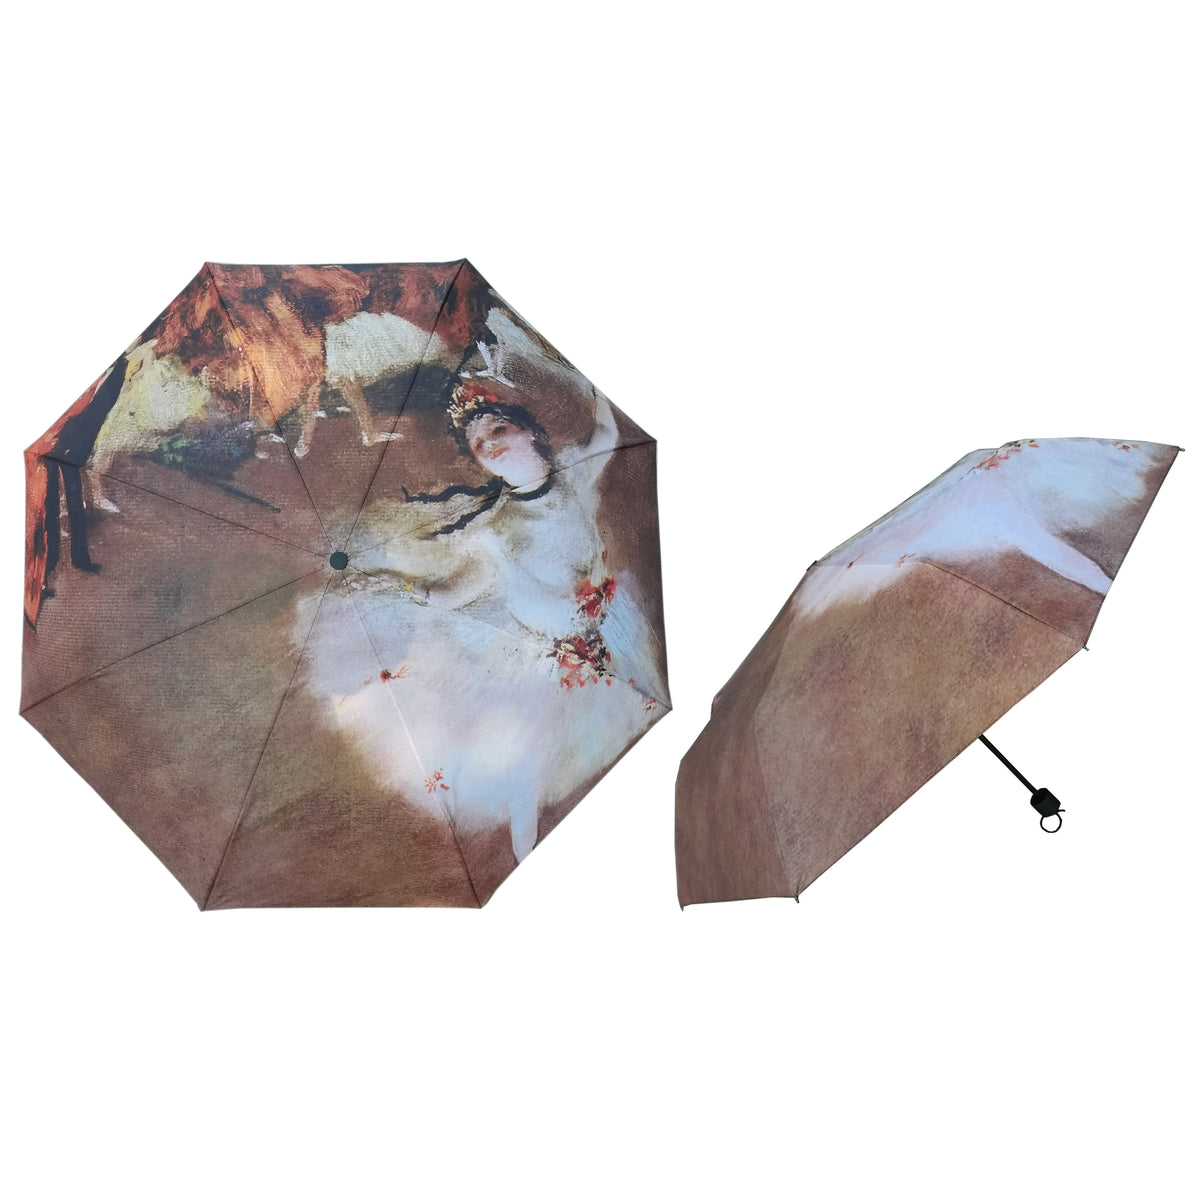 Degas: The Star Folding Umbrella